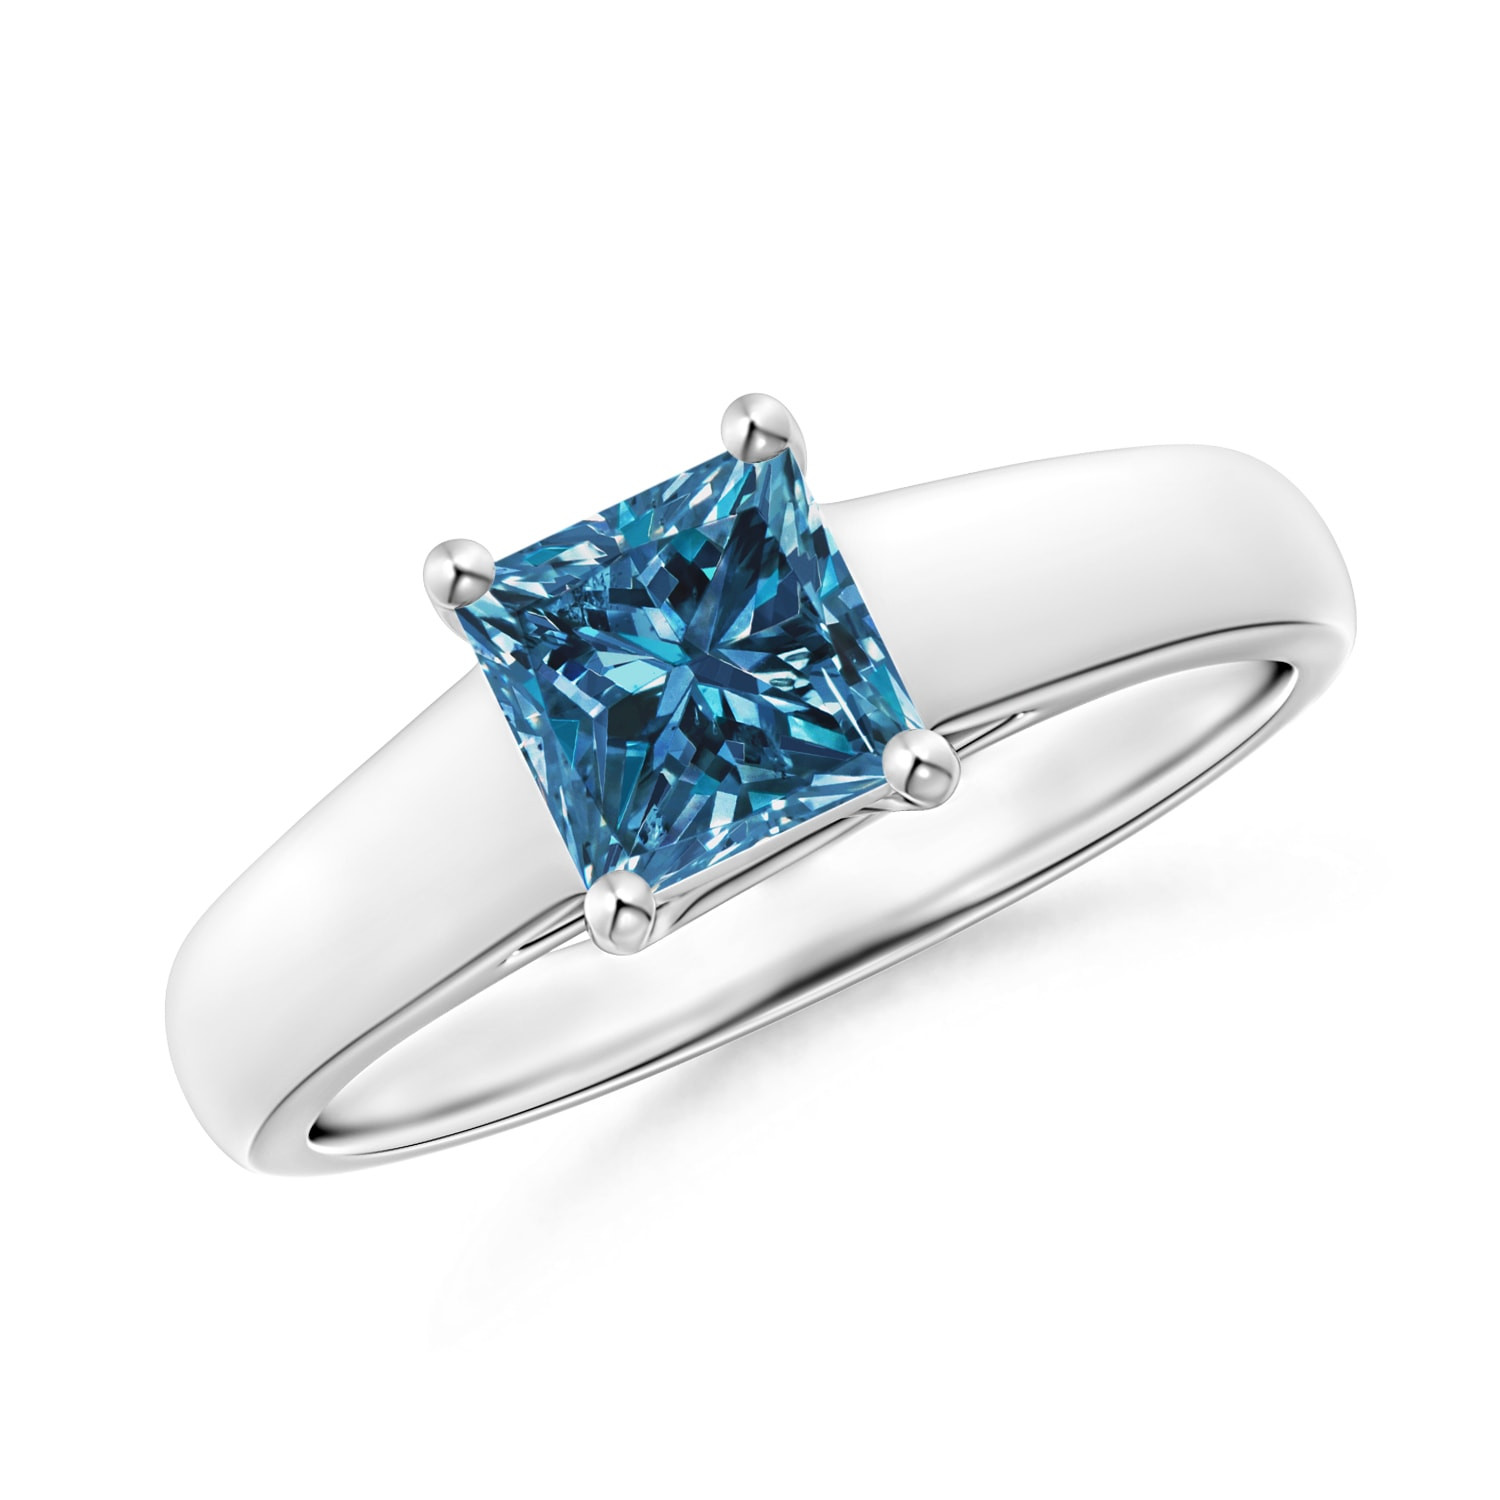 Princess Cut Blue Diamond Engagement Rings
 Princess Cut Enhanced Blue Diamond Solitaire Engagement